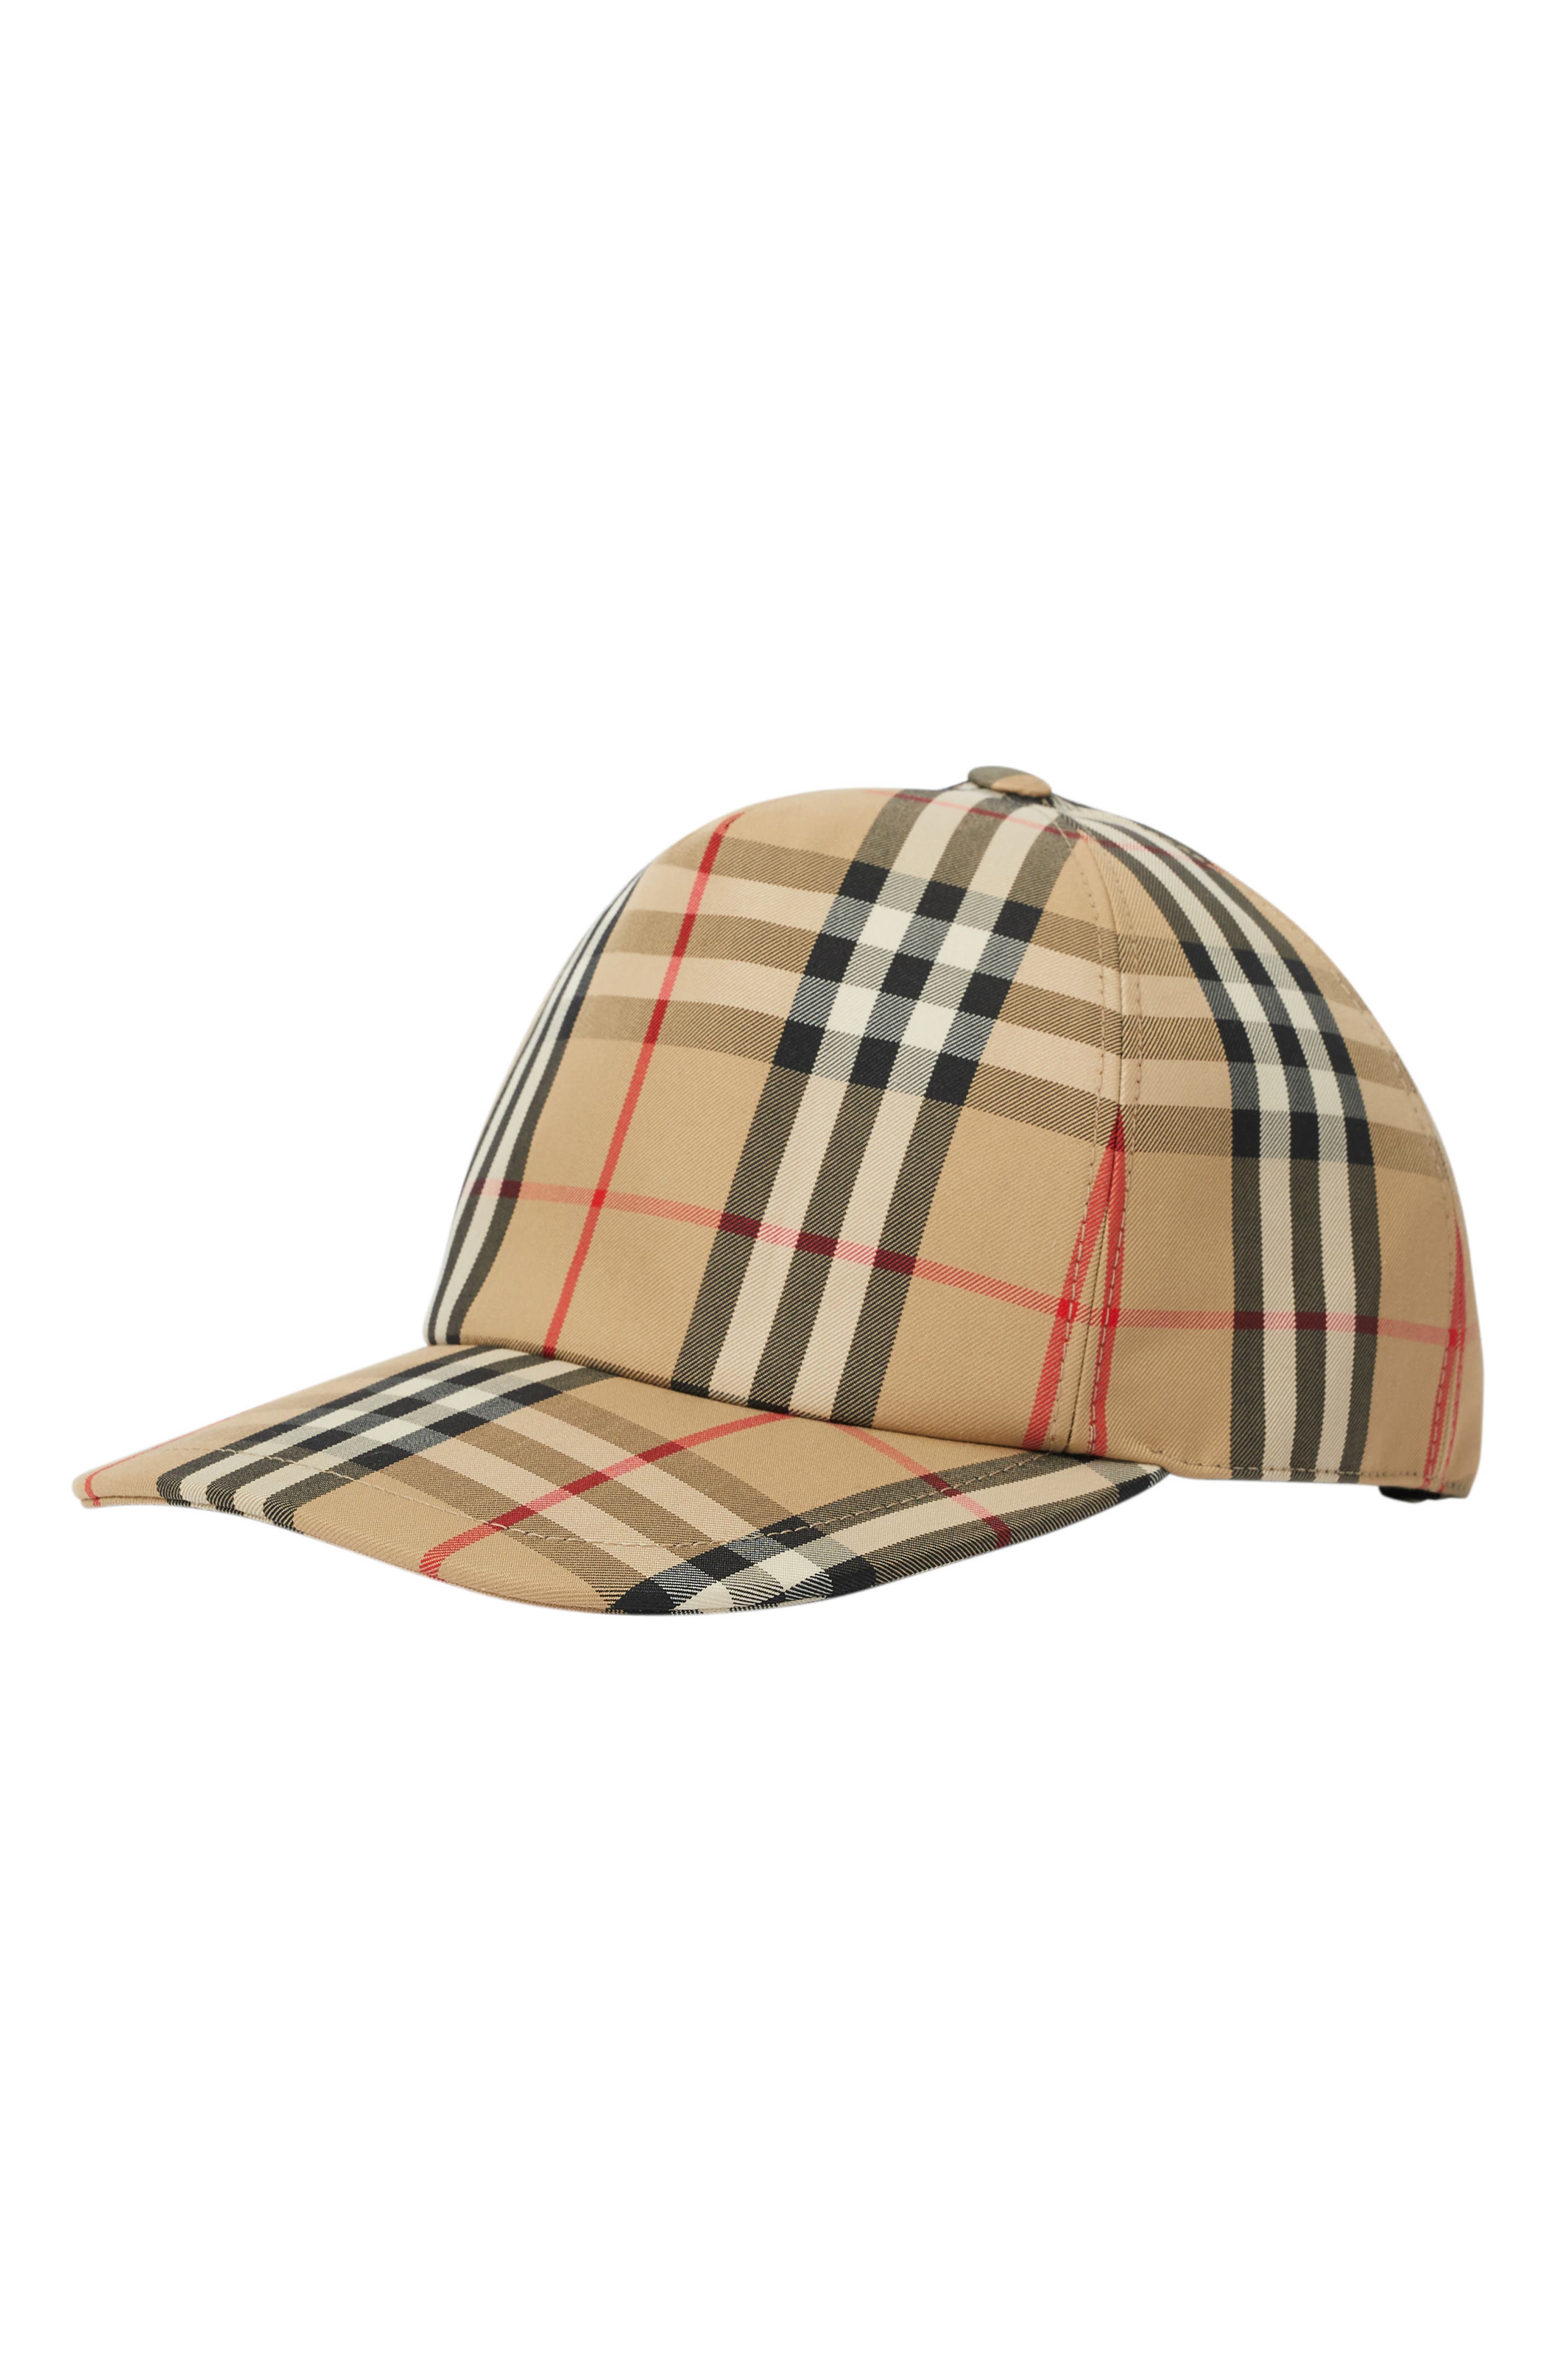 burberry baseball cap